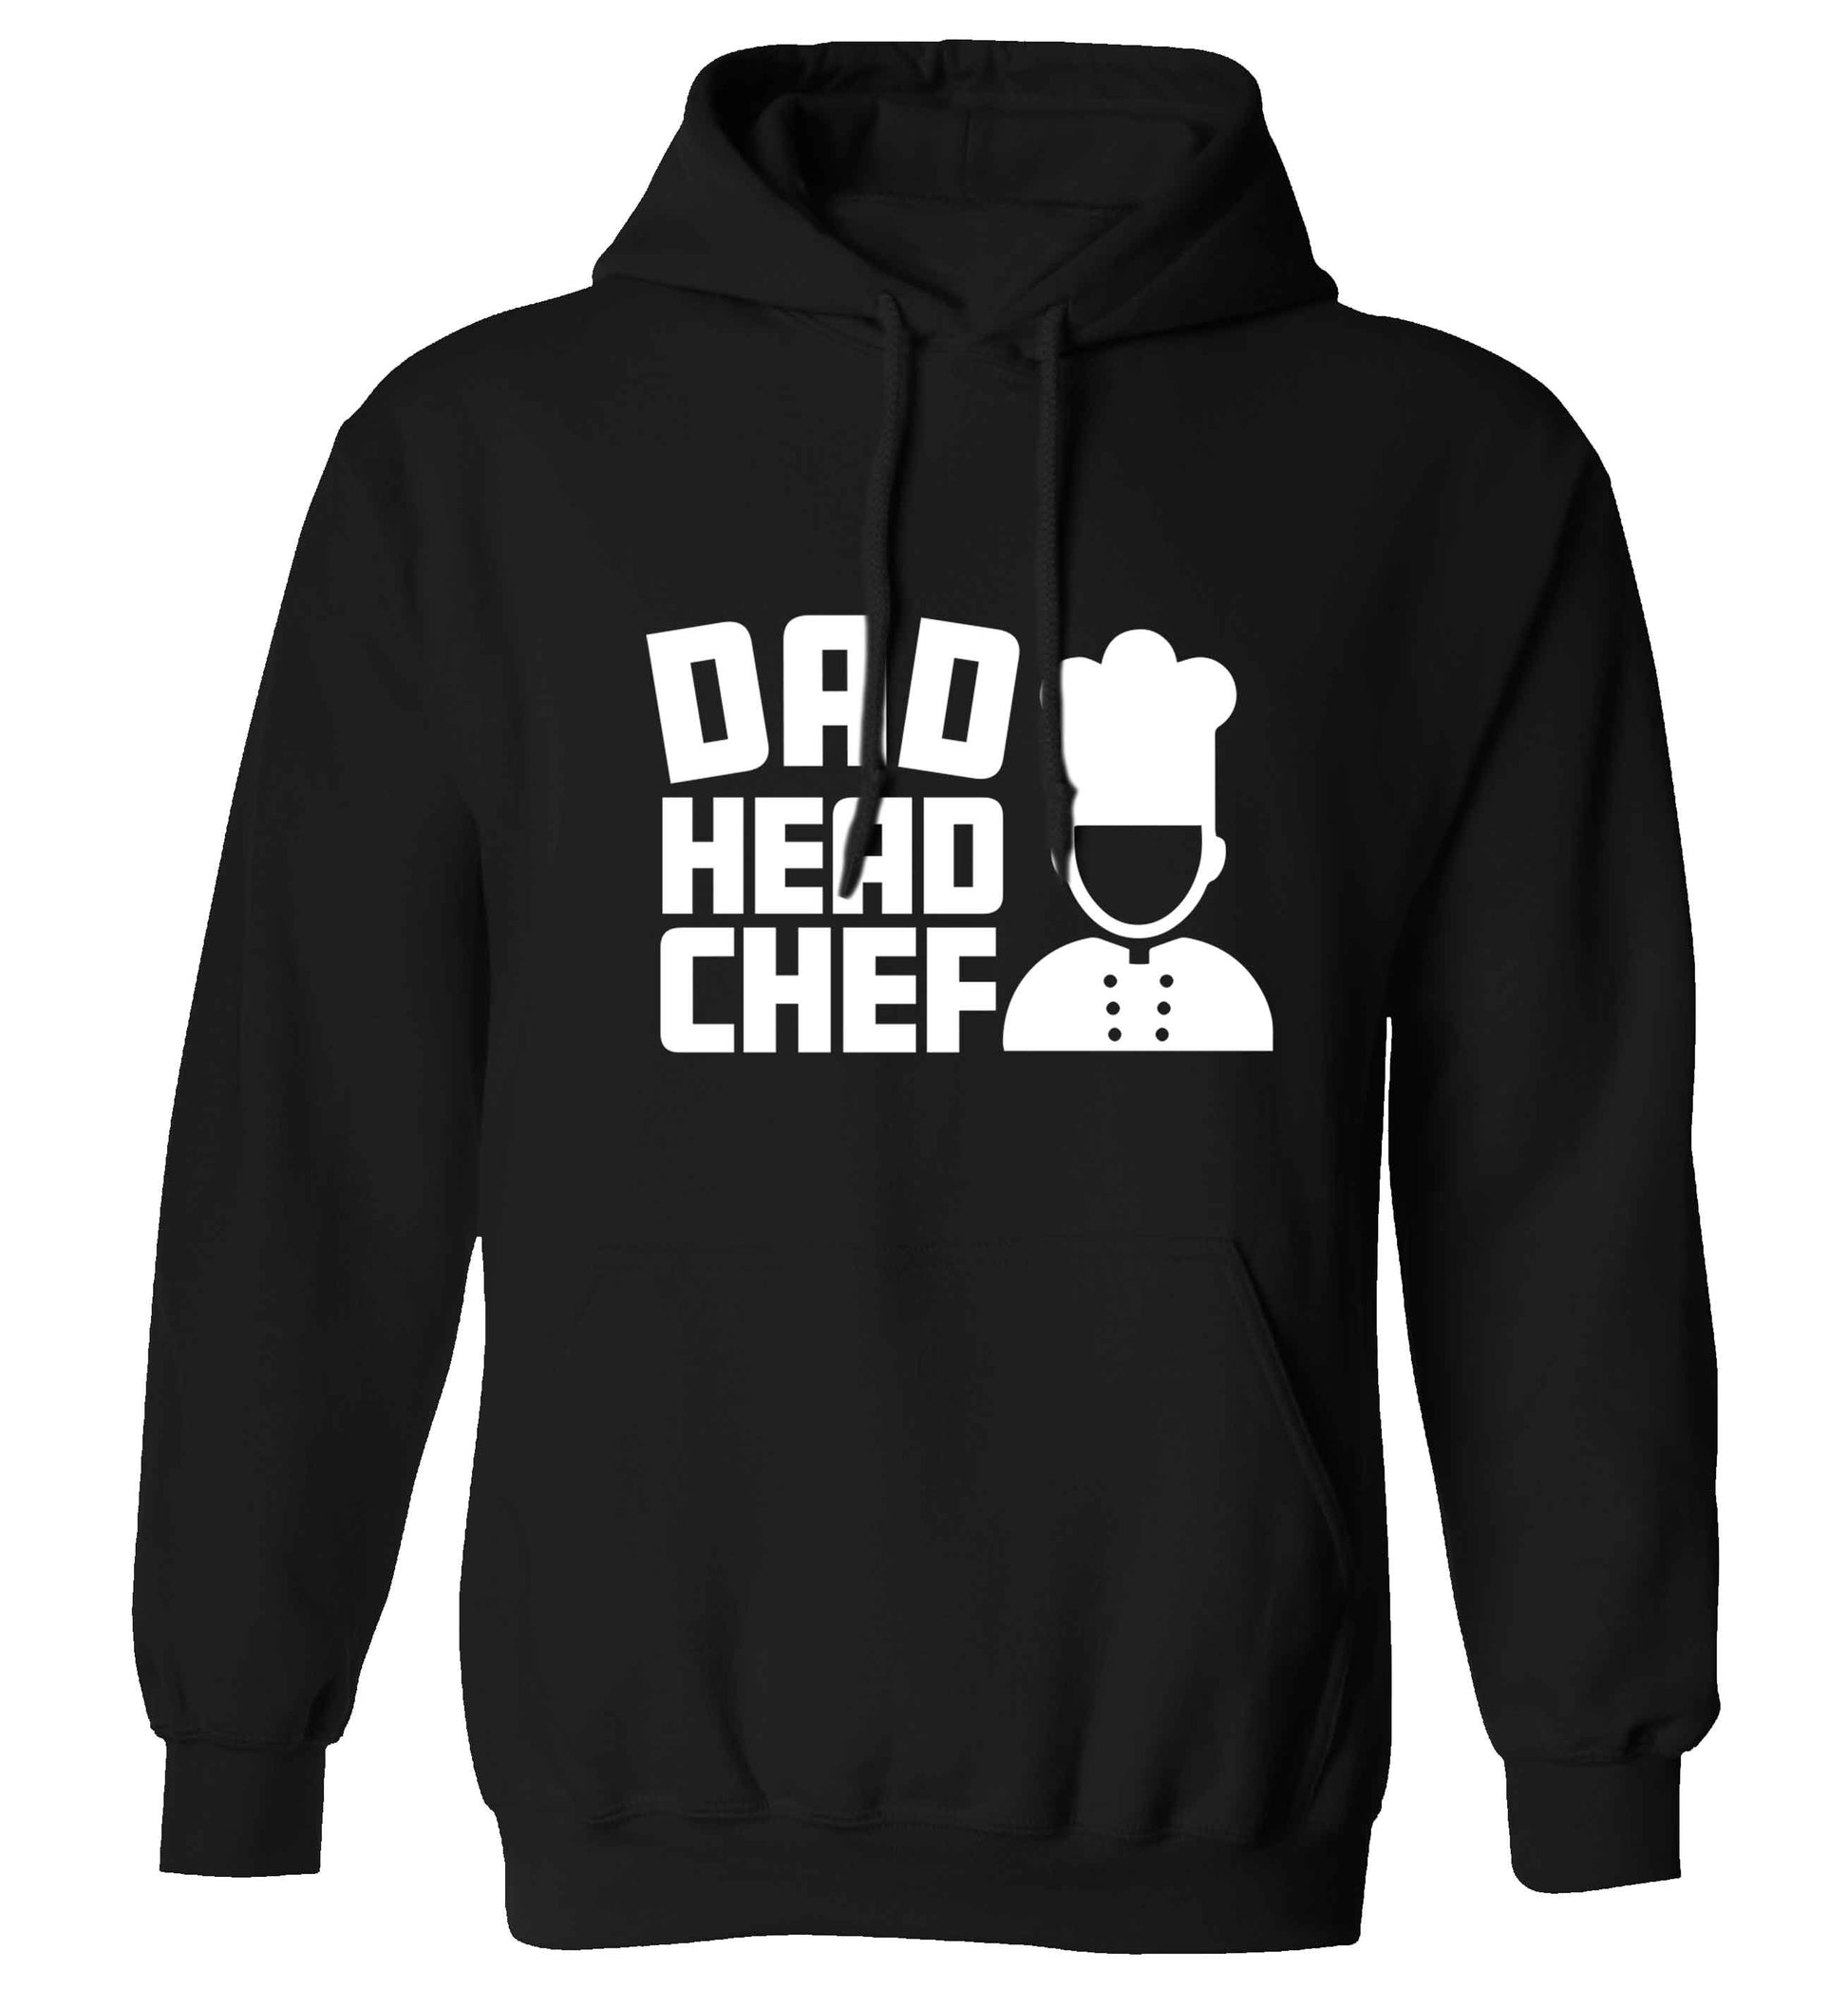 Dad head chef adults unisex black hoodie 2XL